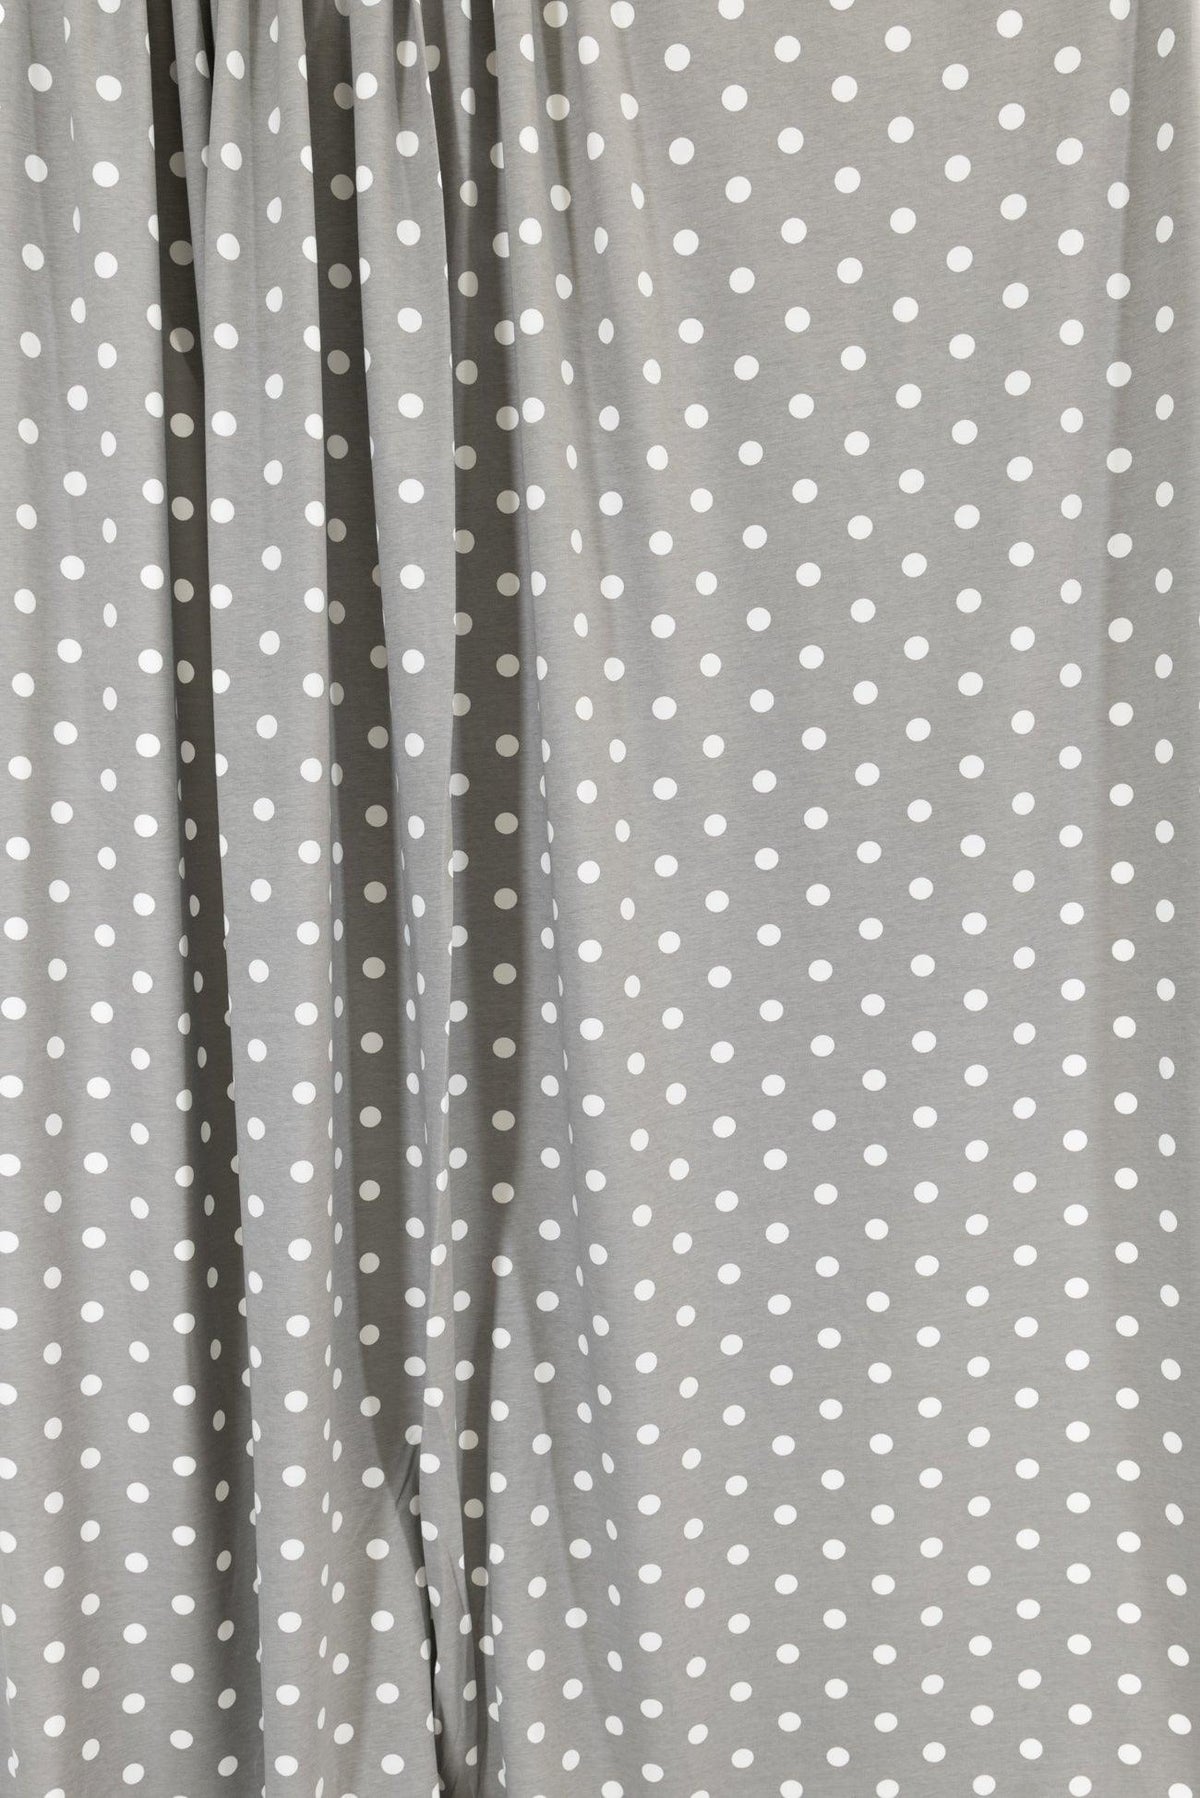 Dove Gray Dots Cotton/Spandex Knit - Marcy Tilton Fabrics